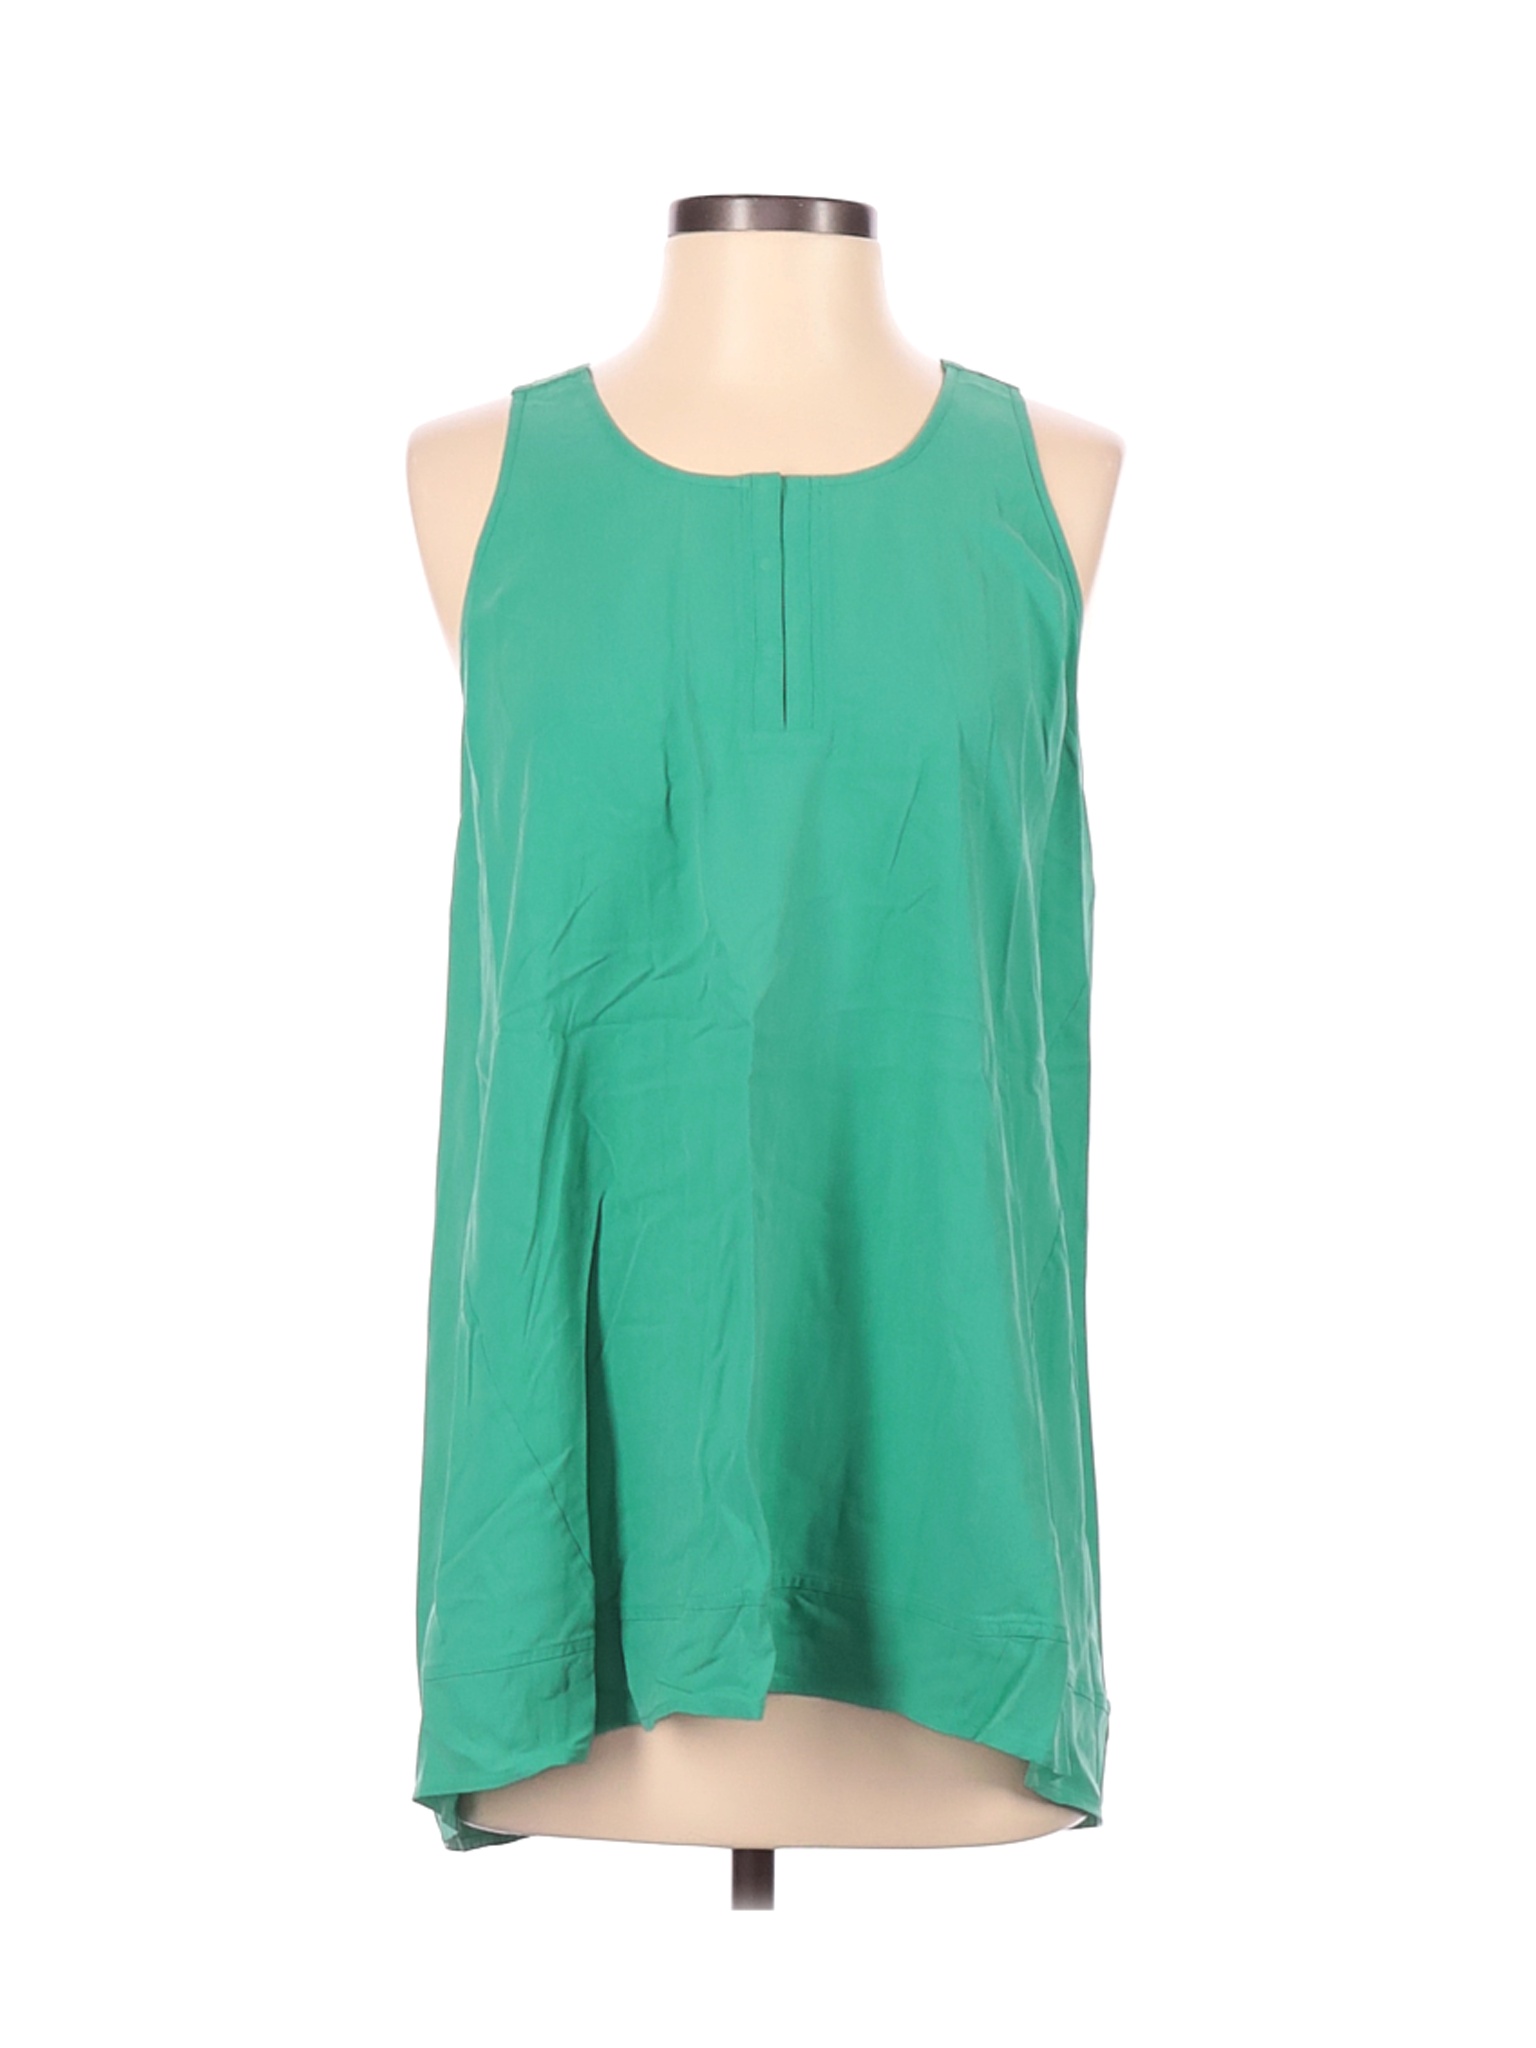 Go By Go Silk Women Green Sleeveless Silk Top S | eBay